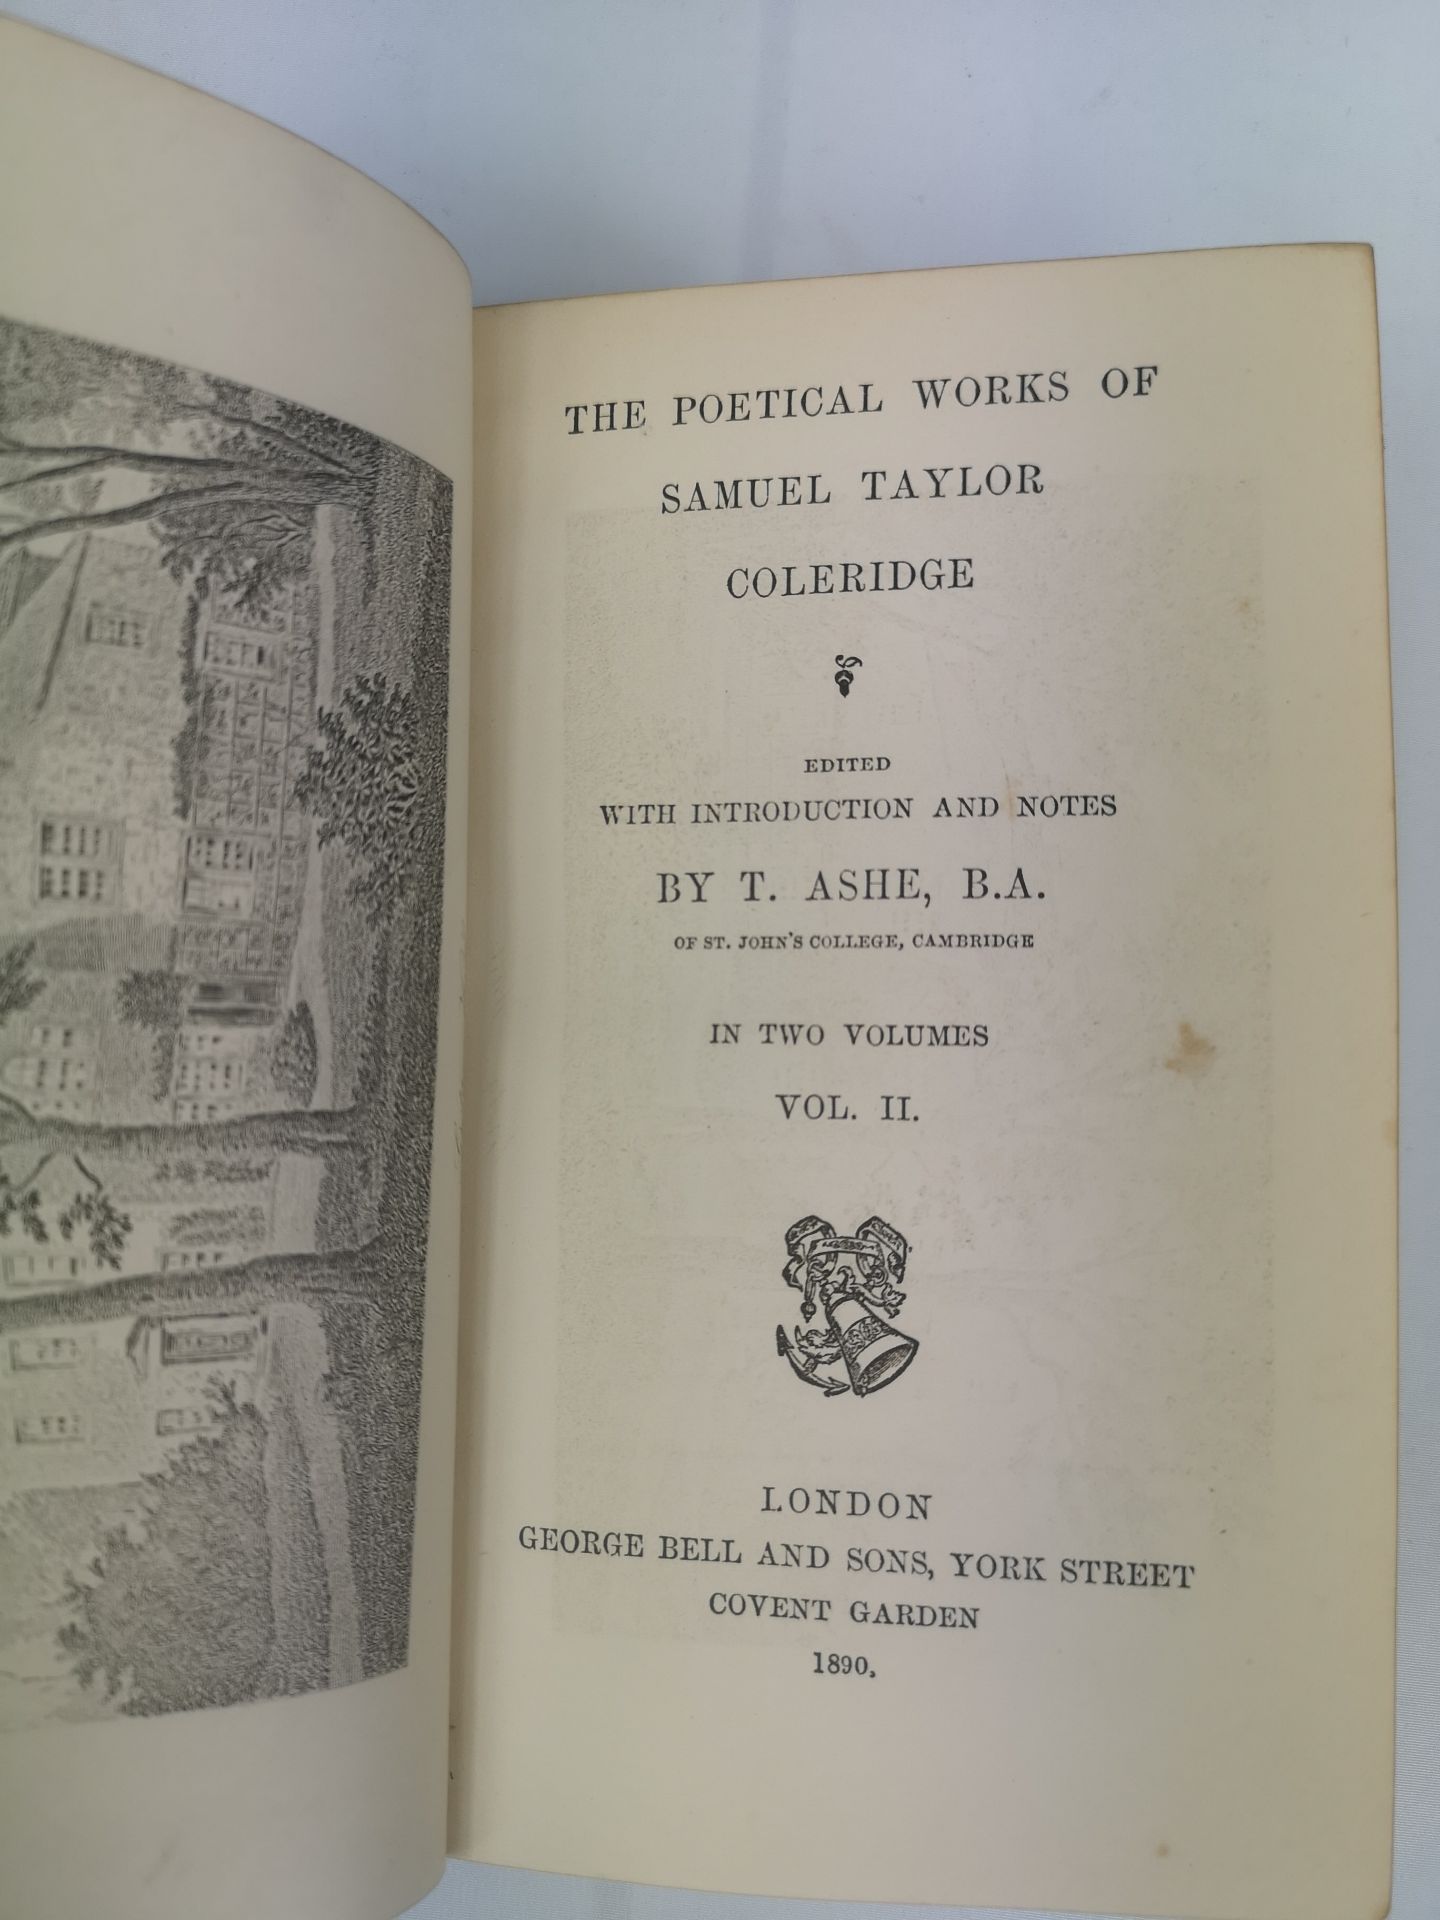 The Poetical Works of Samuel Taylor Coleridge - Image 3 of 3